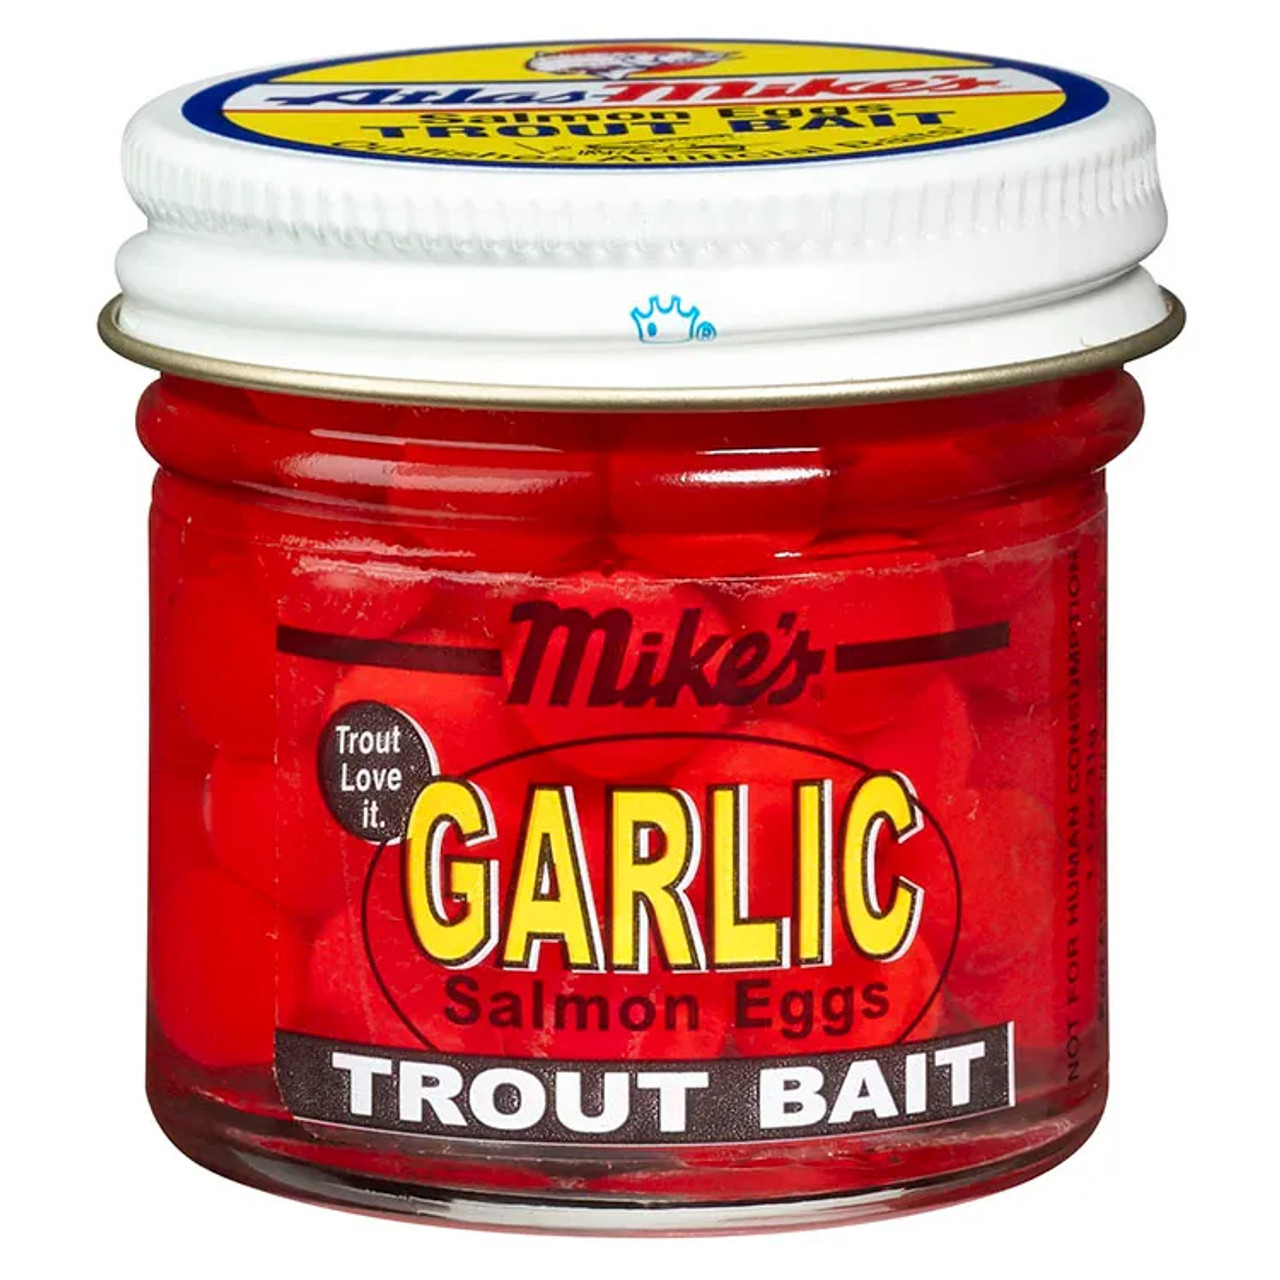 Atlas Garlic Salmon Eggs - Lone Butte Sporting Goods Ltd